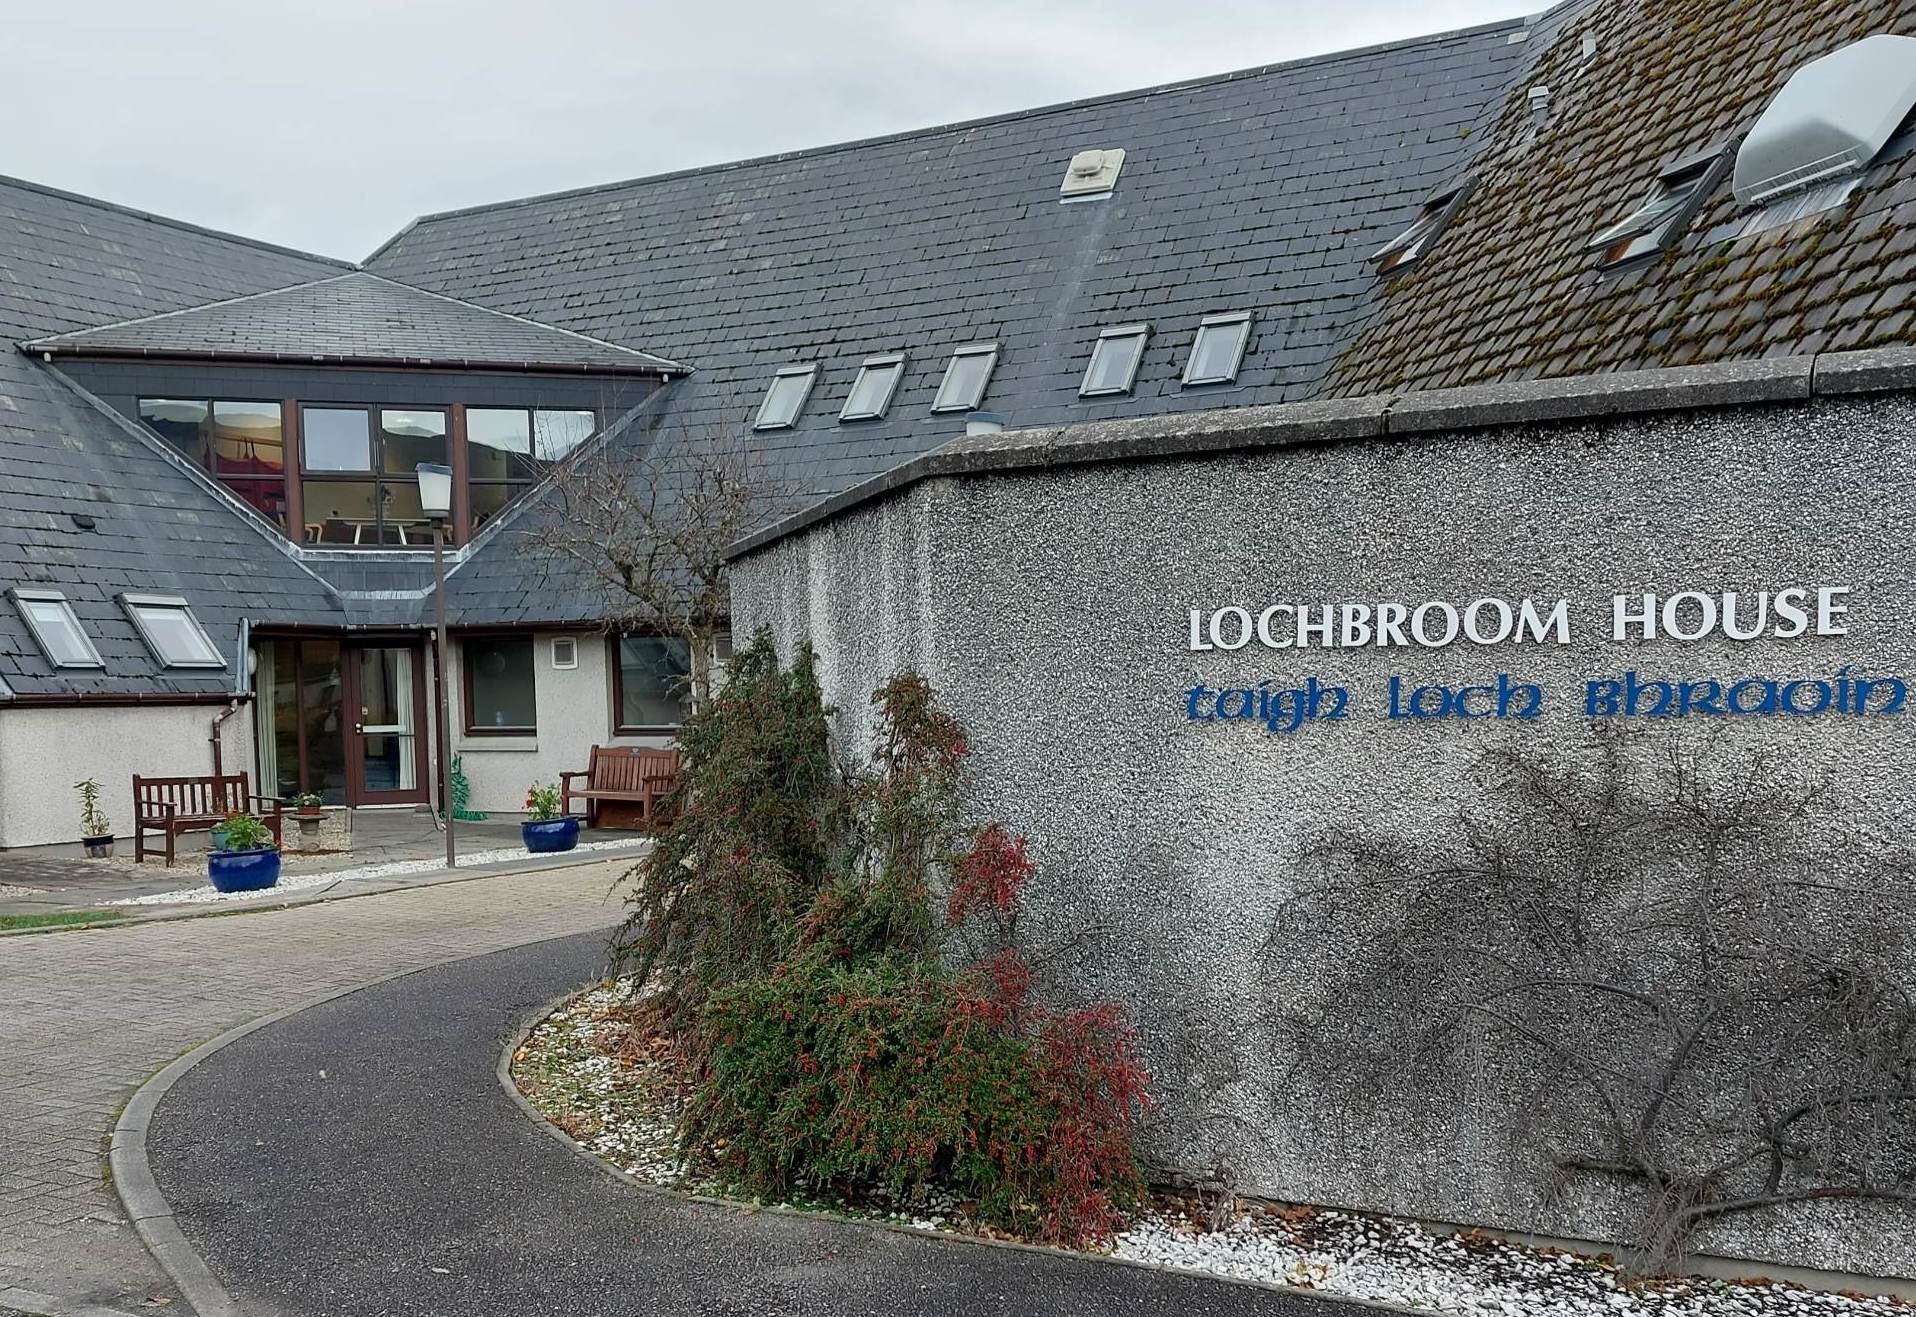 Lochbroom House